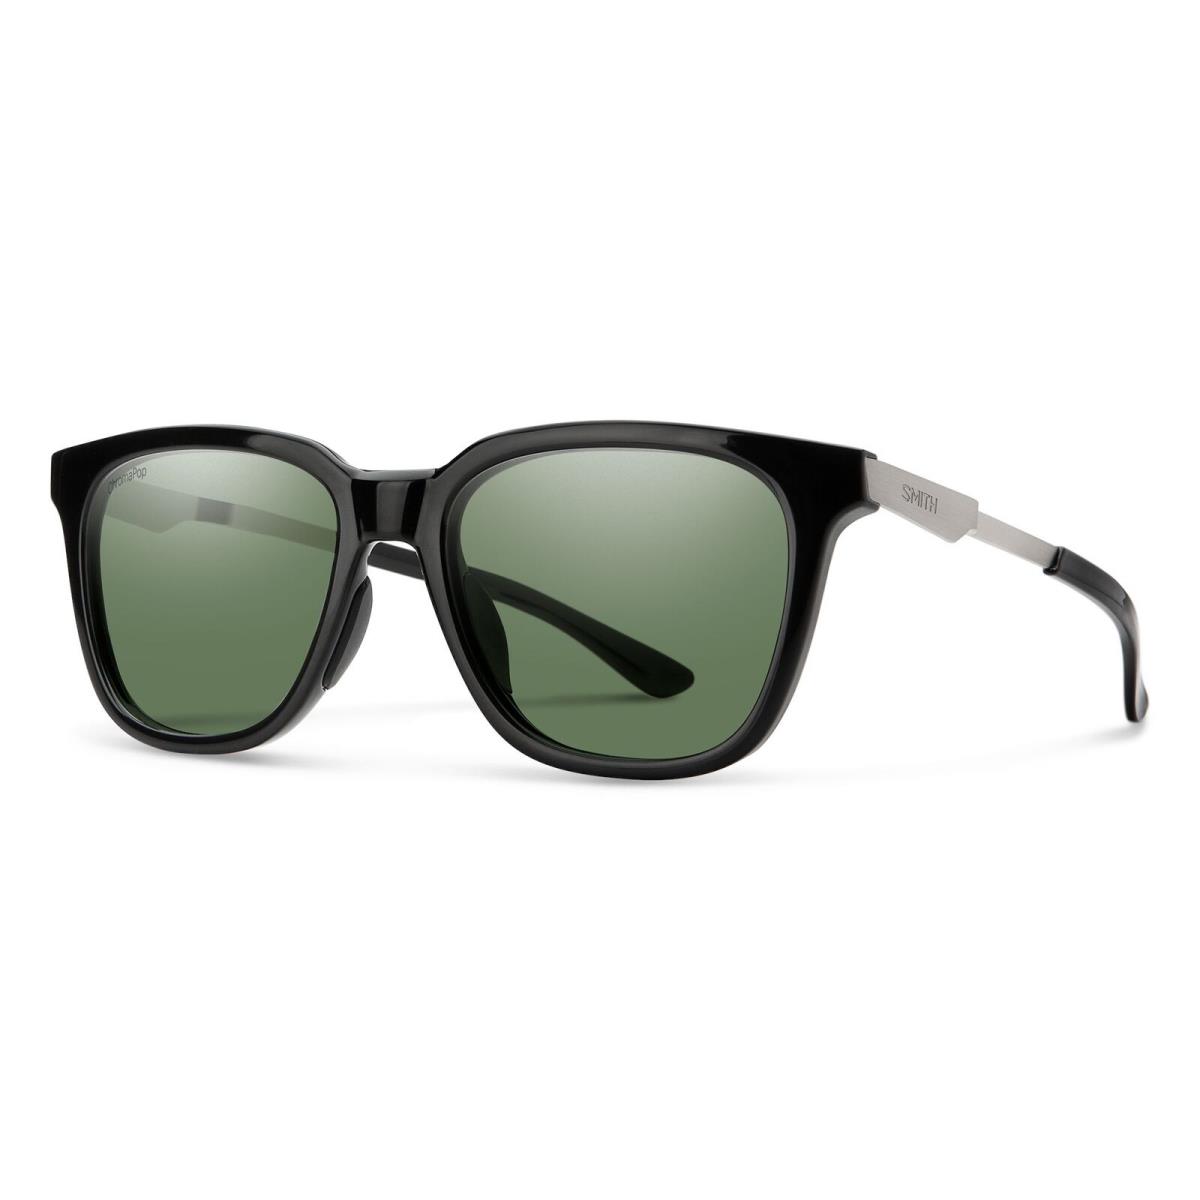 Smith Optics Roam Sunglasses Black Frame w/ Chromapop Polarized Gray Green Lens